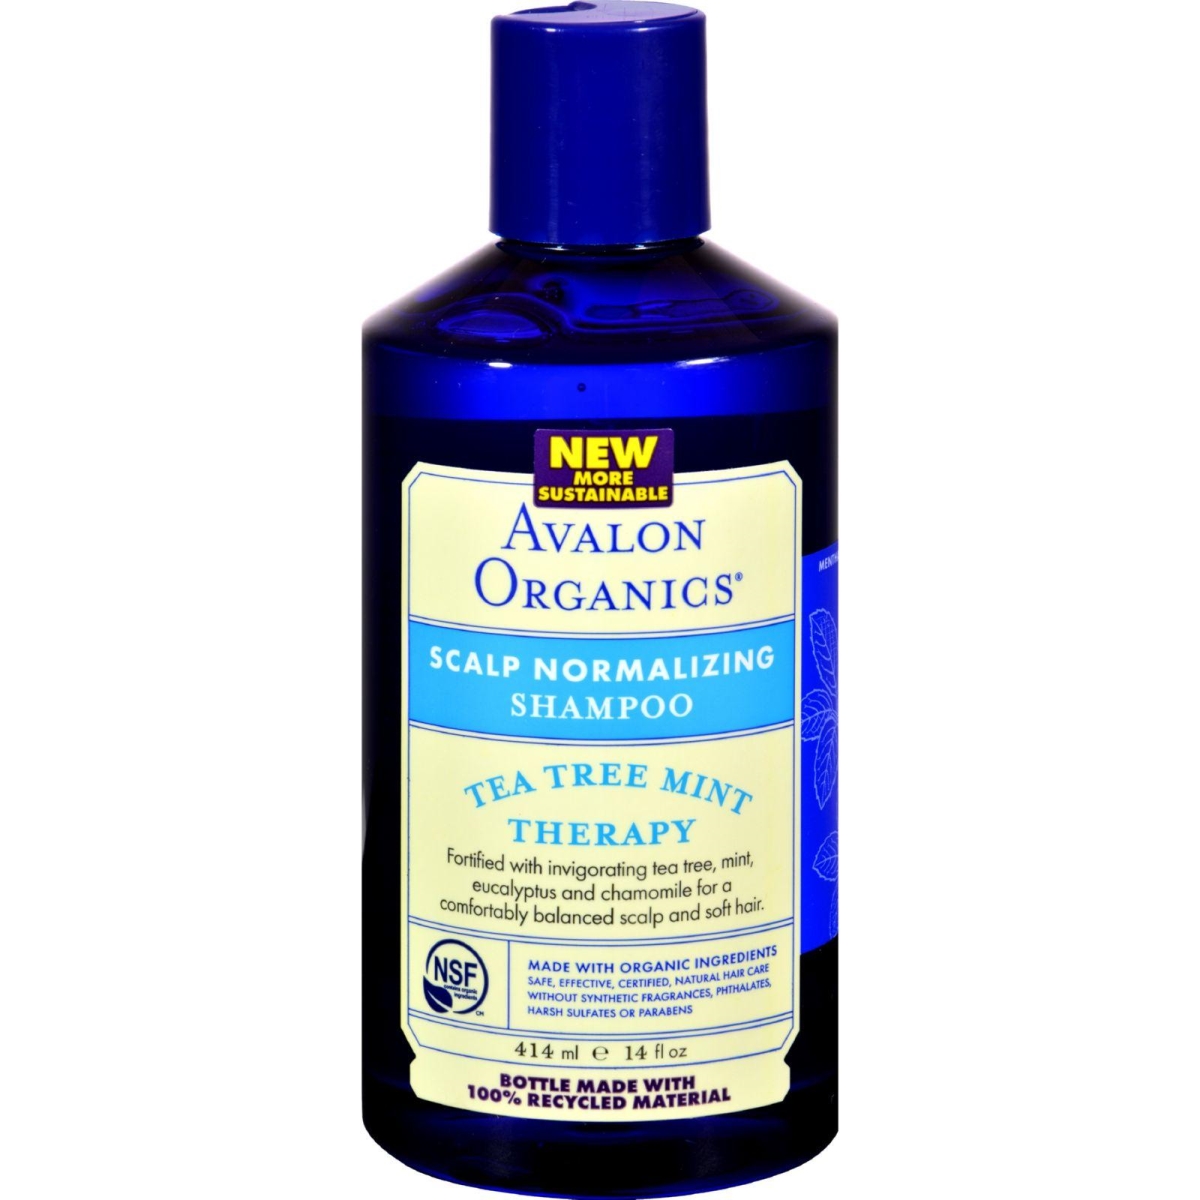 Hg0253229 14 Fl Oz Organics Scalp Normalizing Shampoo Tea Tree Mint Therapy